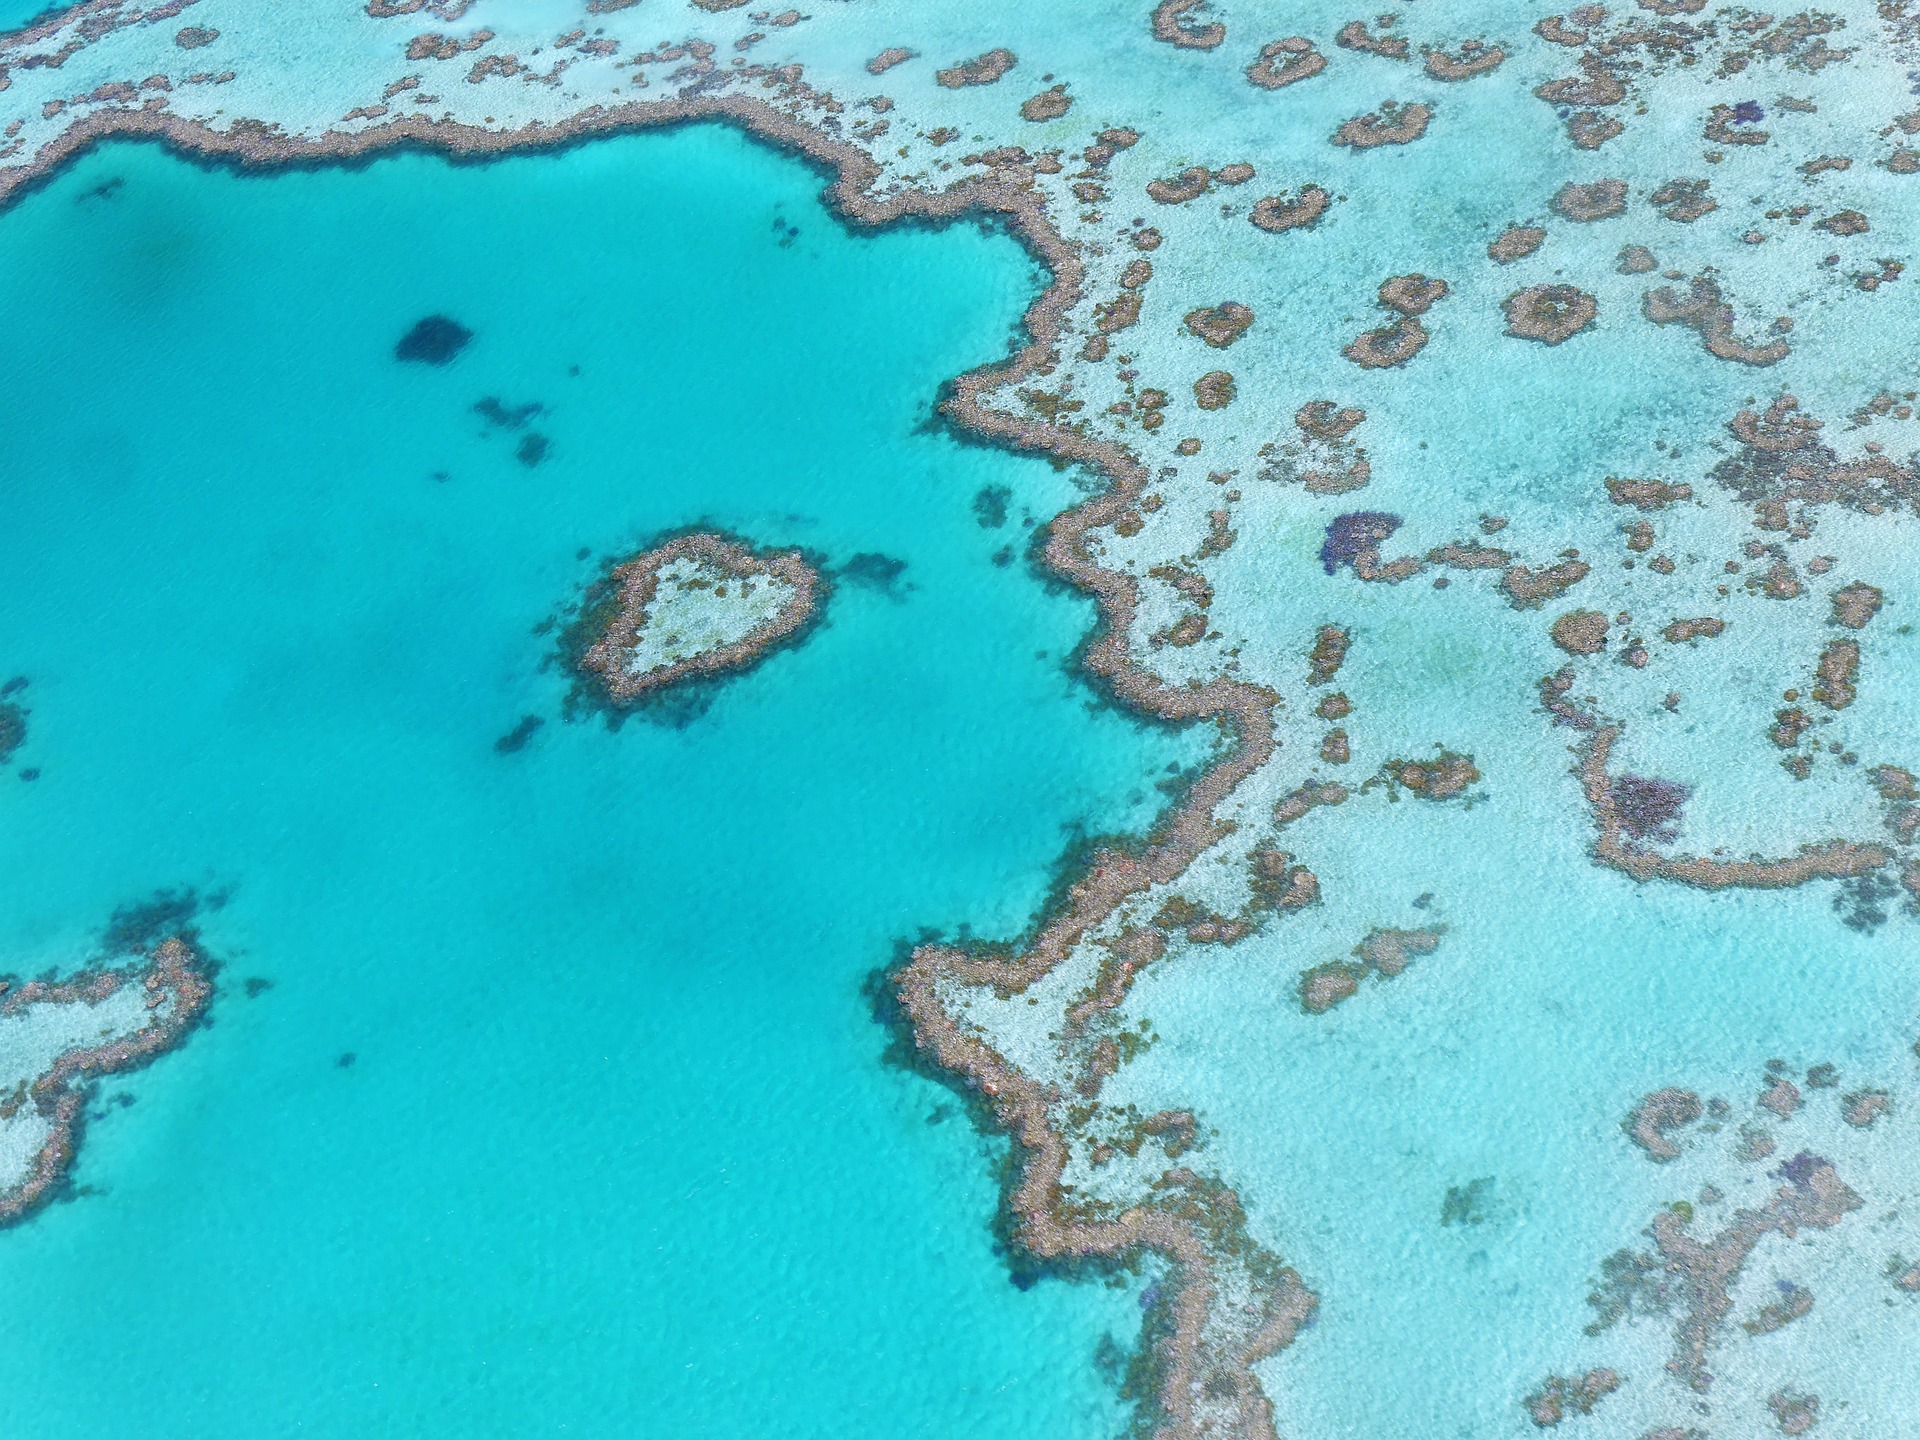 Australian Reef | Backpacking in Australia | Solo Female Travel Blog